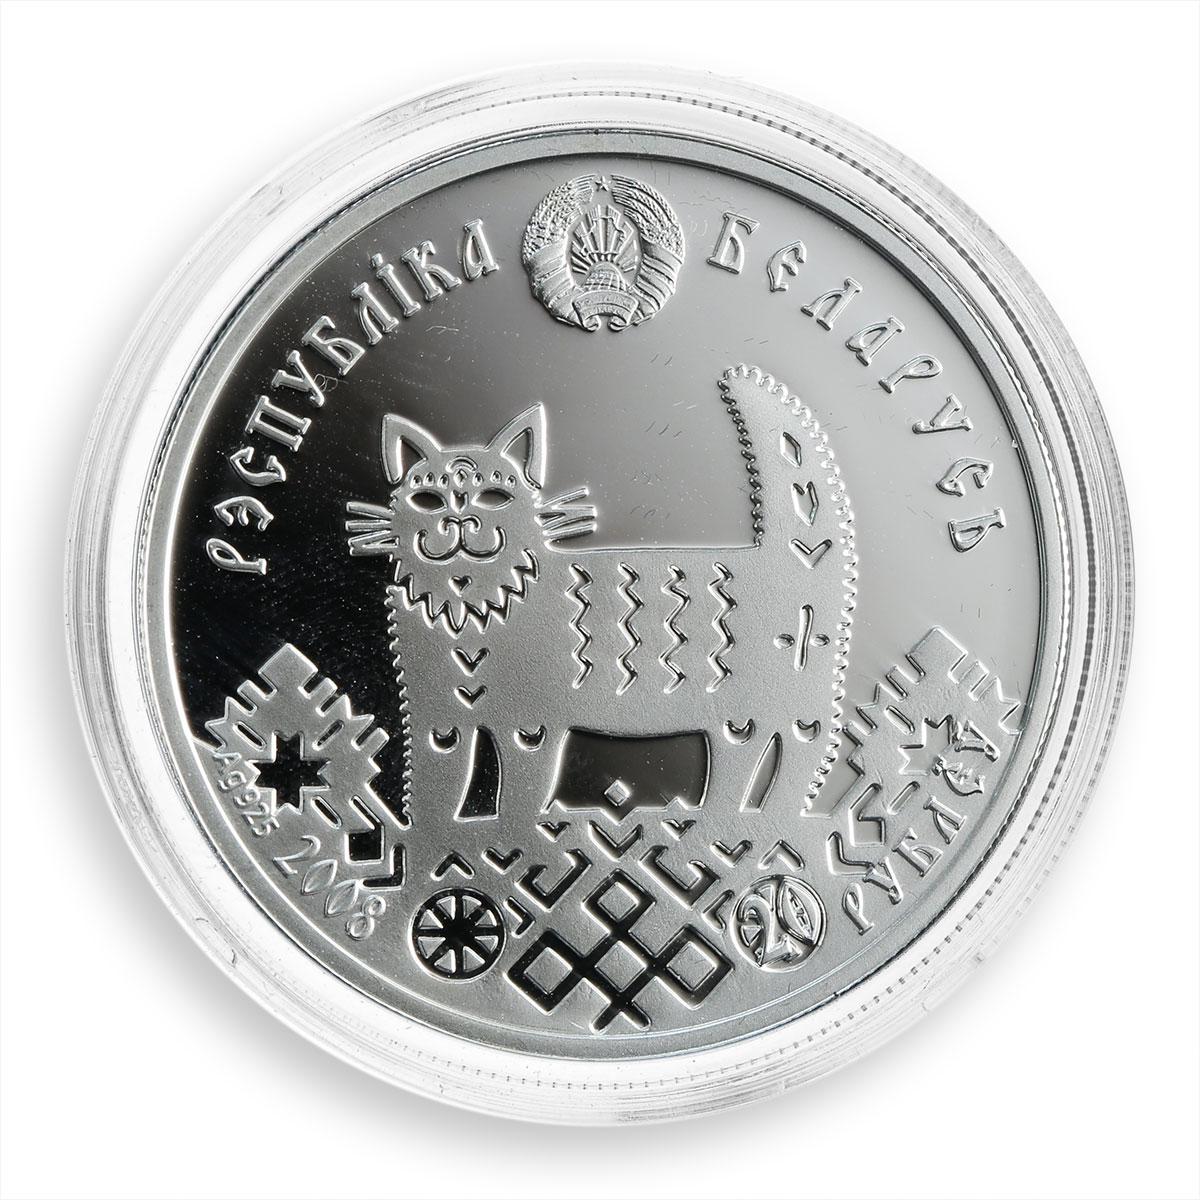 Belarus 20 rubles, Housewarming, Slavs' Tradition, key, cat, silver coin, 2008